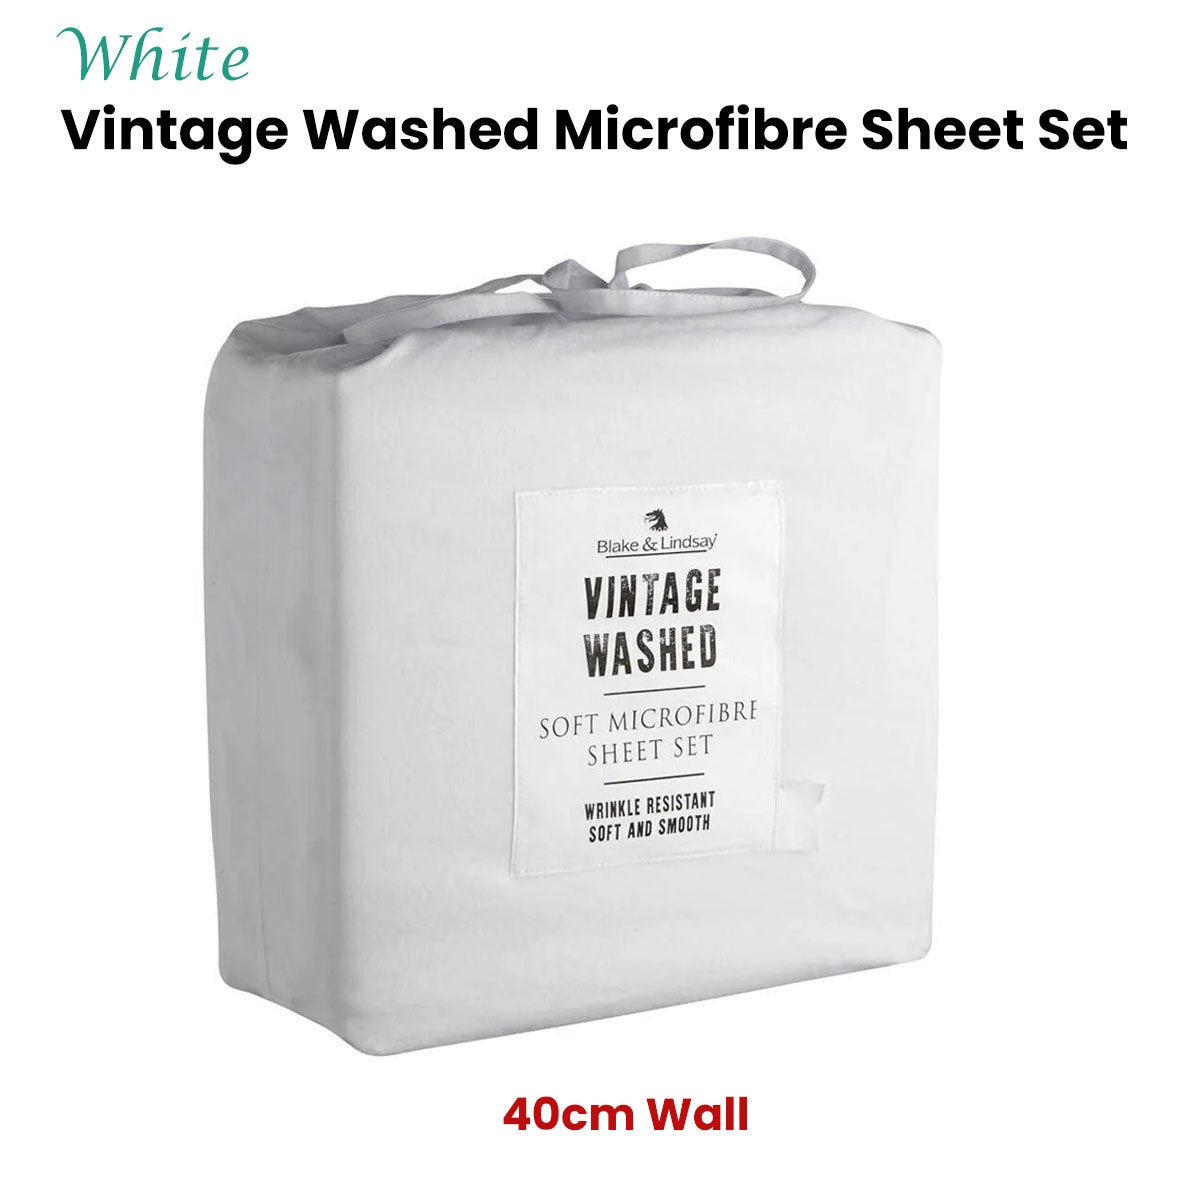 Blake & Lindsay White Vintage Washed Microfibre Sheet Set 40cm Wall Single